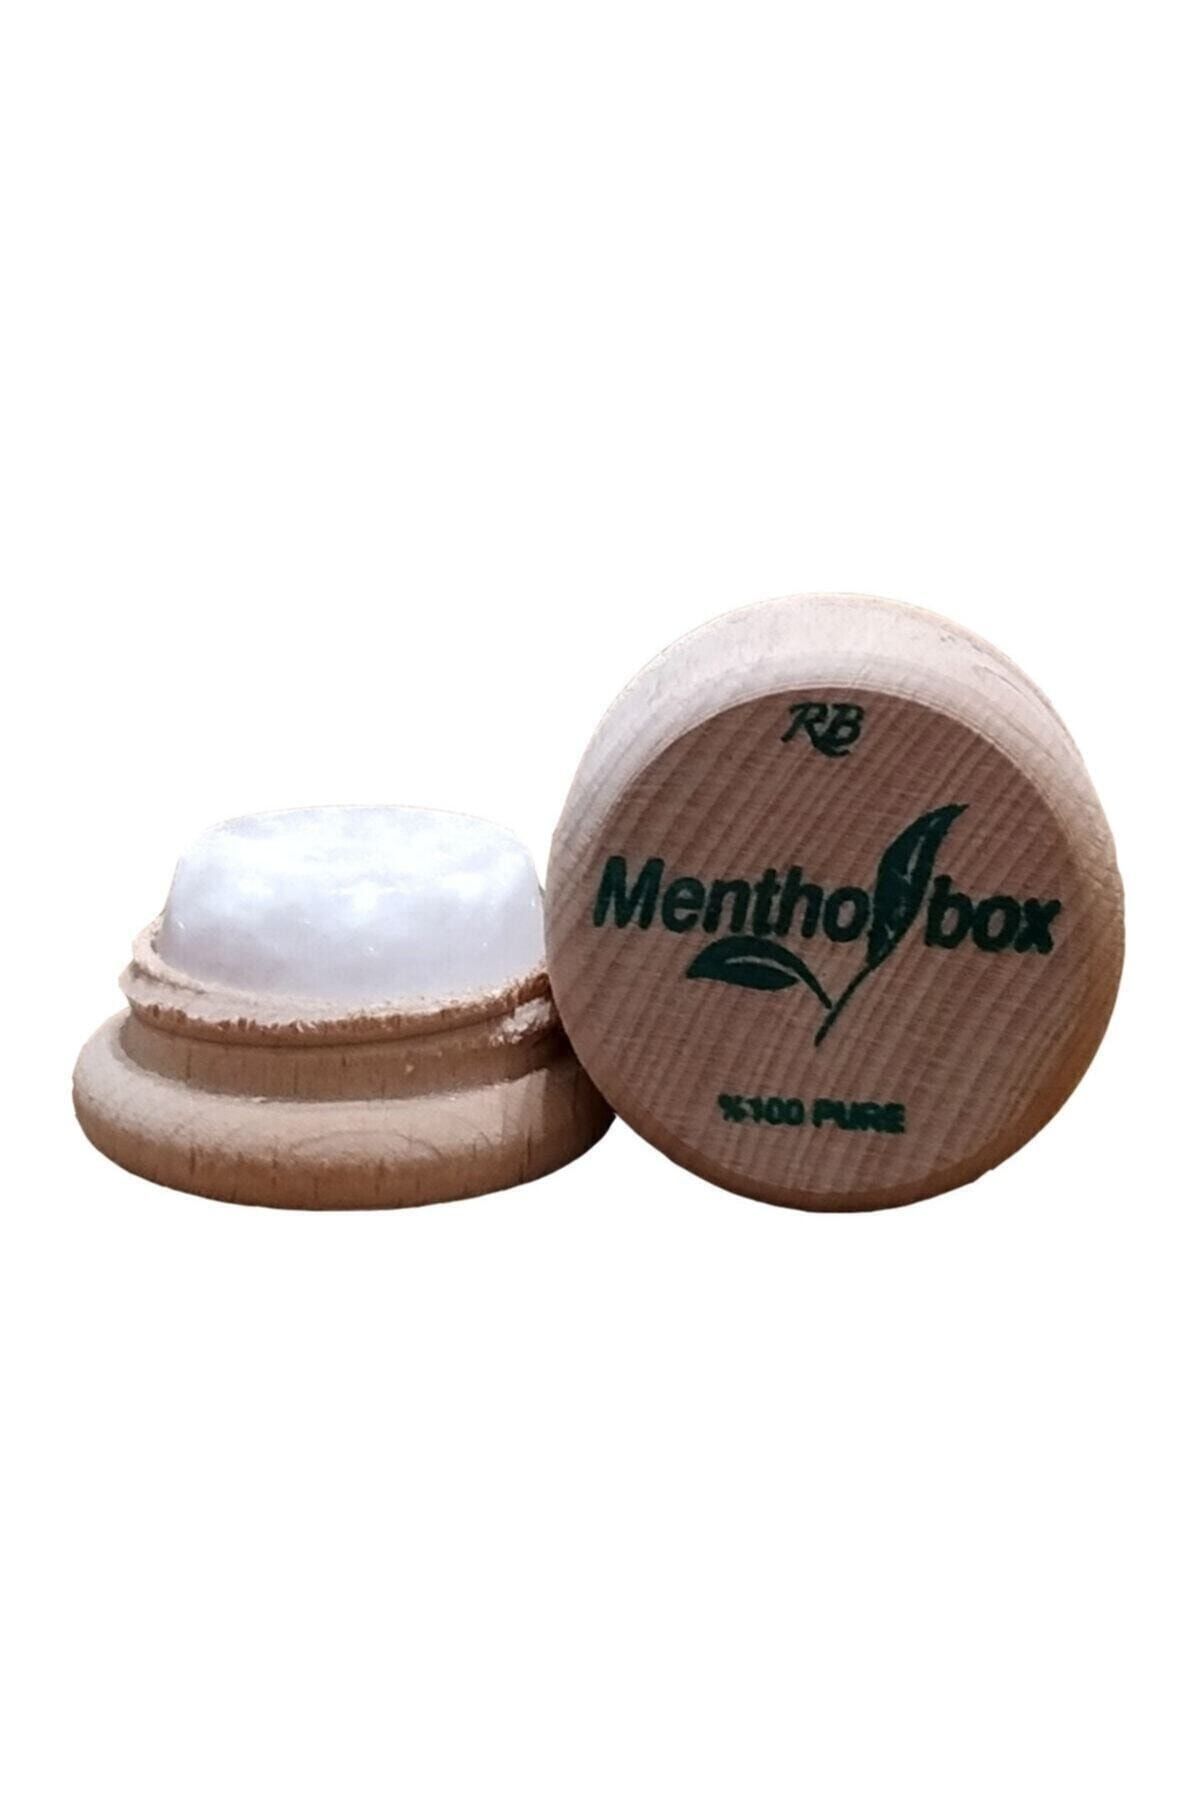 Menthol Box Mentol Taşı 6-7 gr